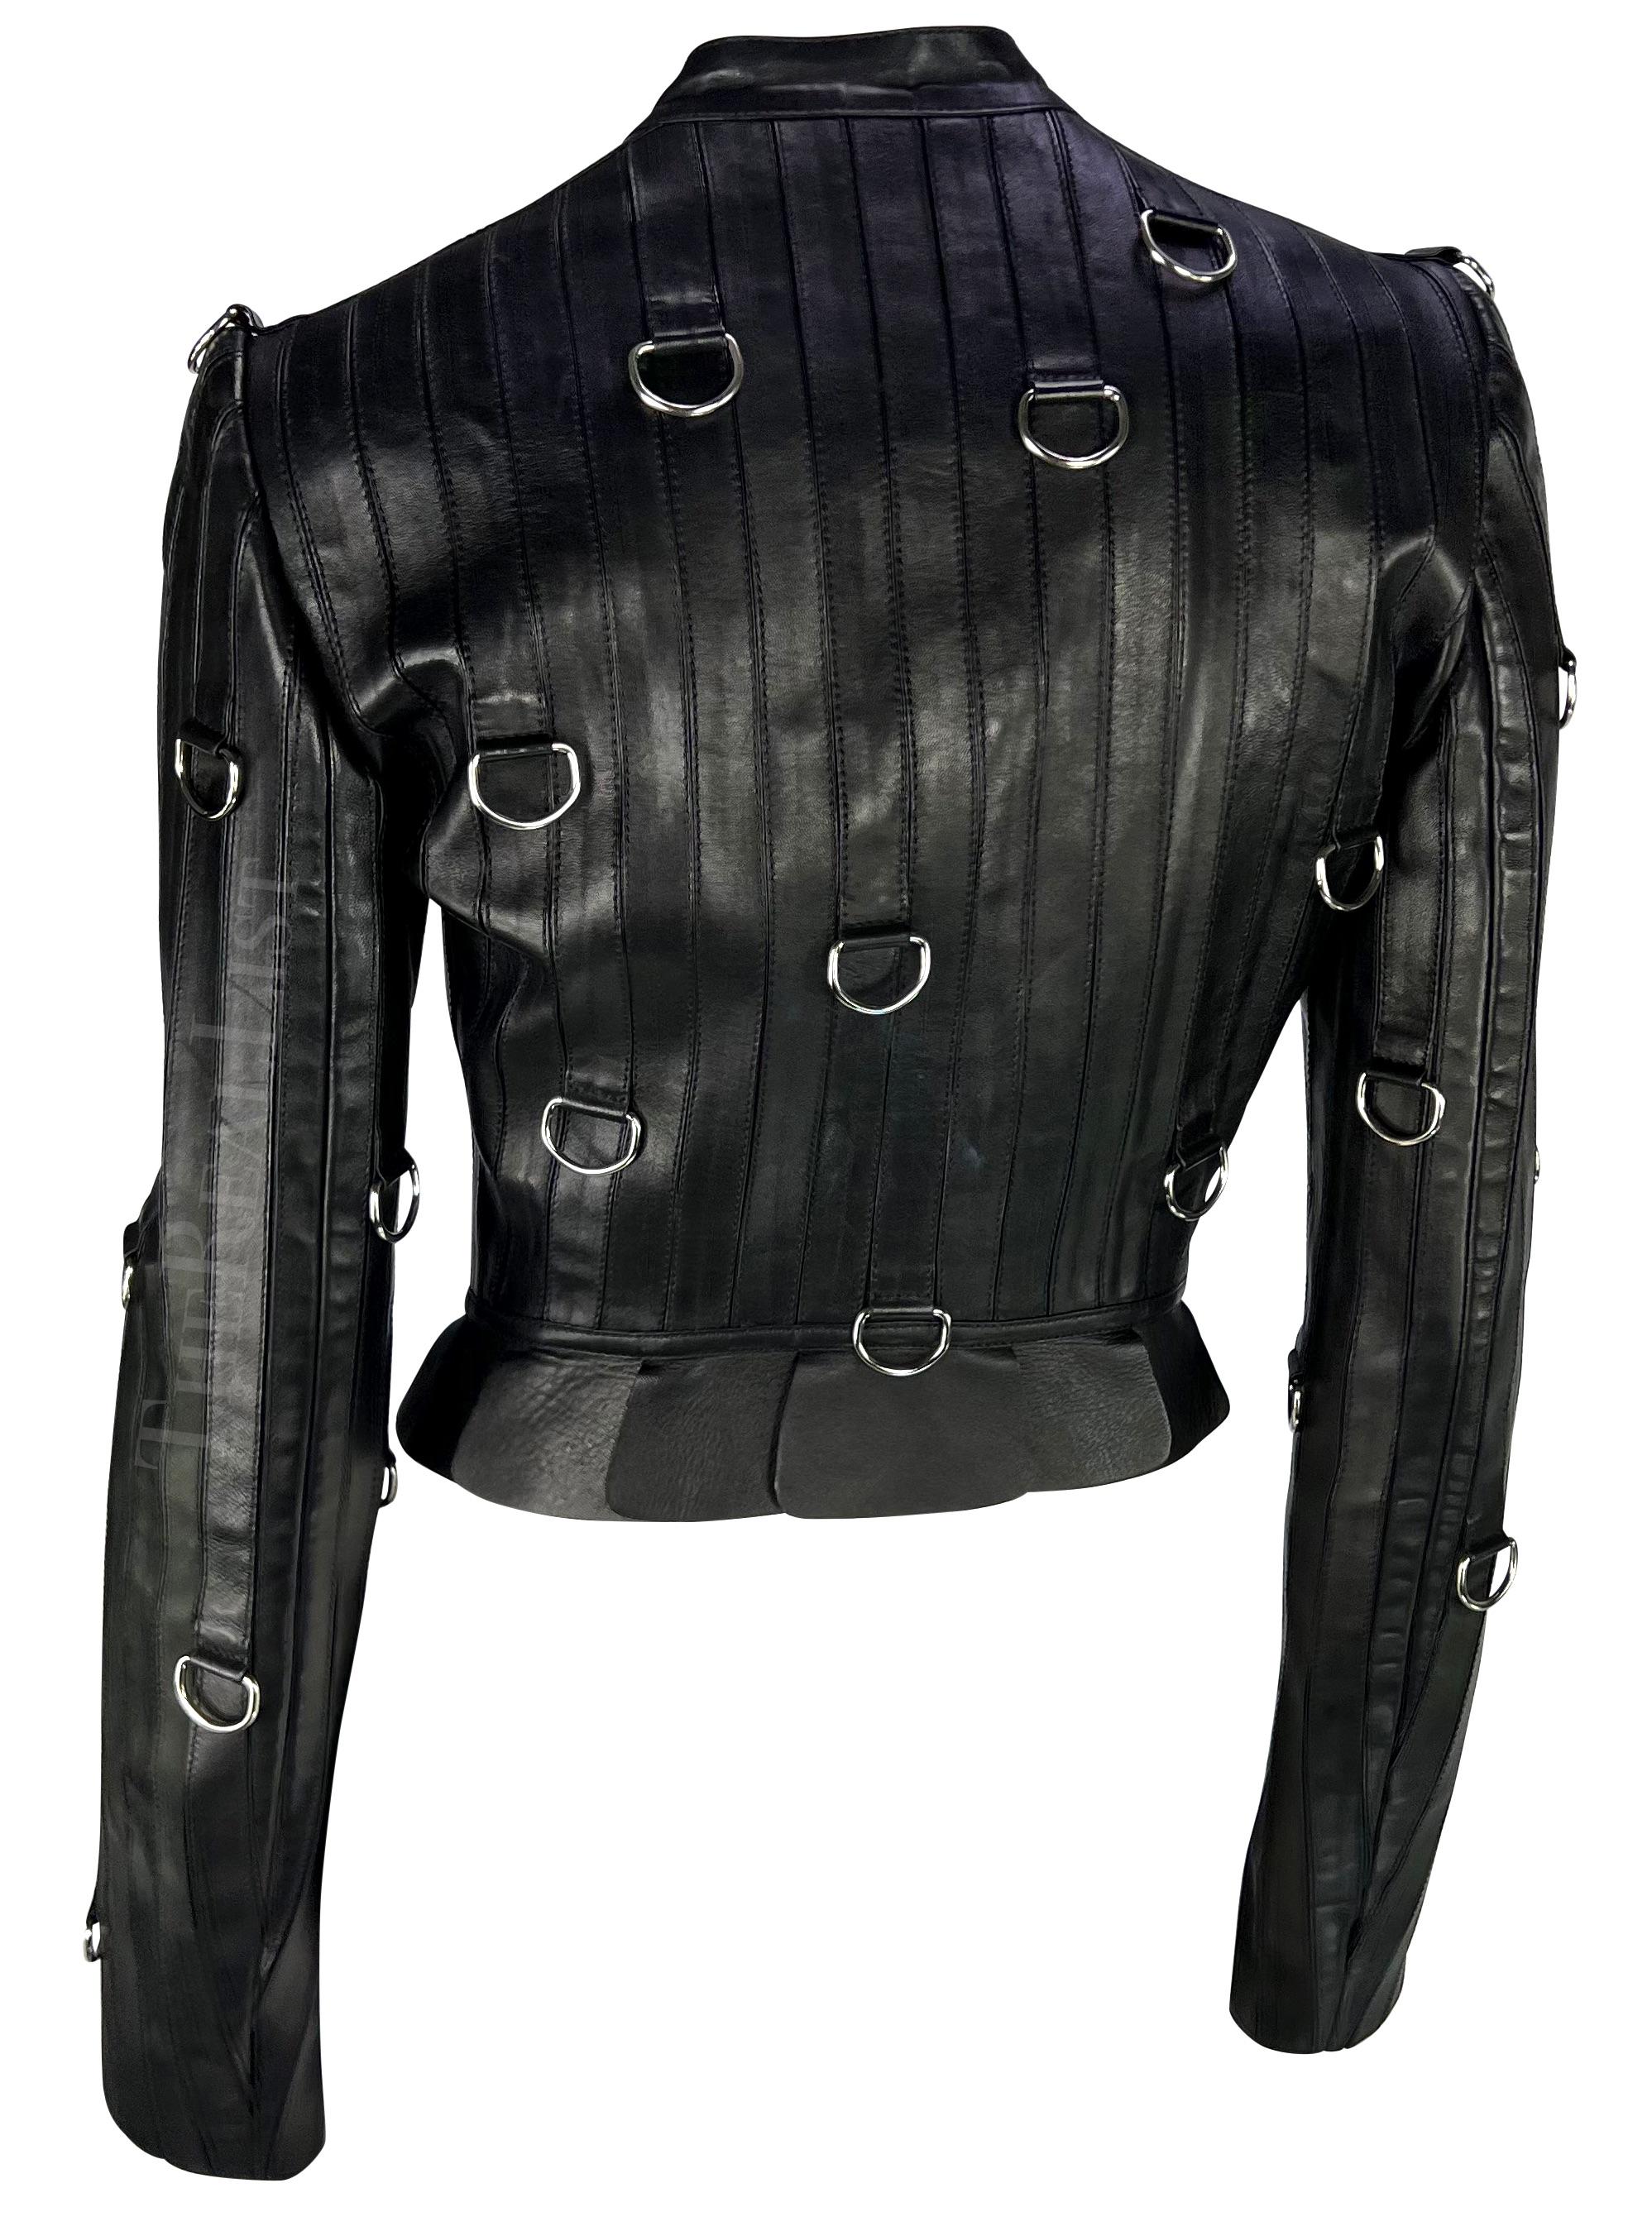 Women's S/S 2003 Alexander McQueen Irere Runway Black Leather Ring Moto Jacket For Sale